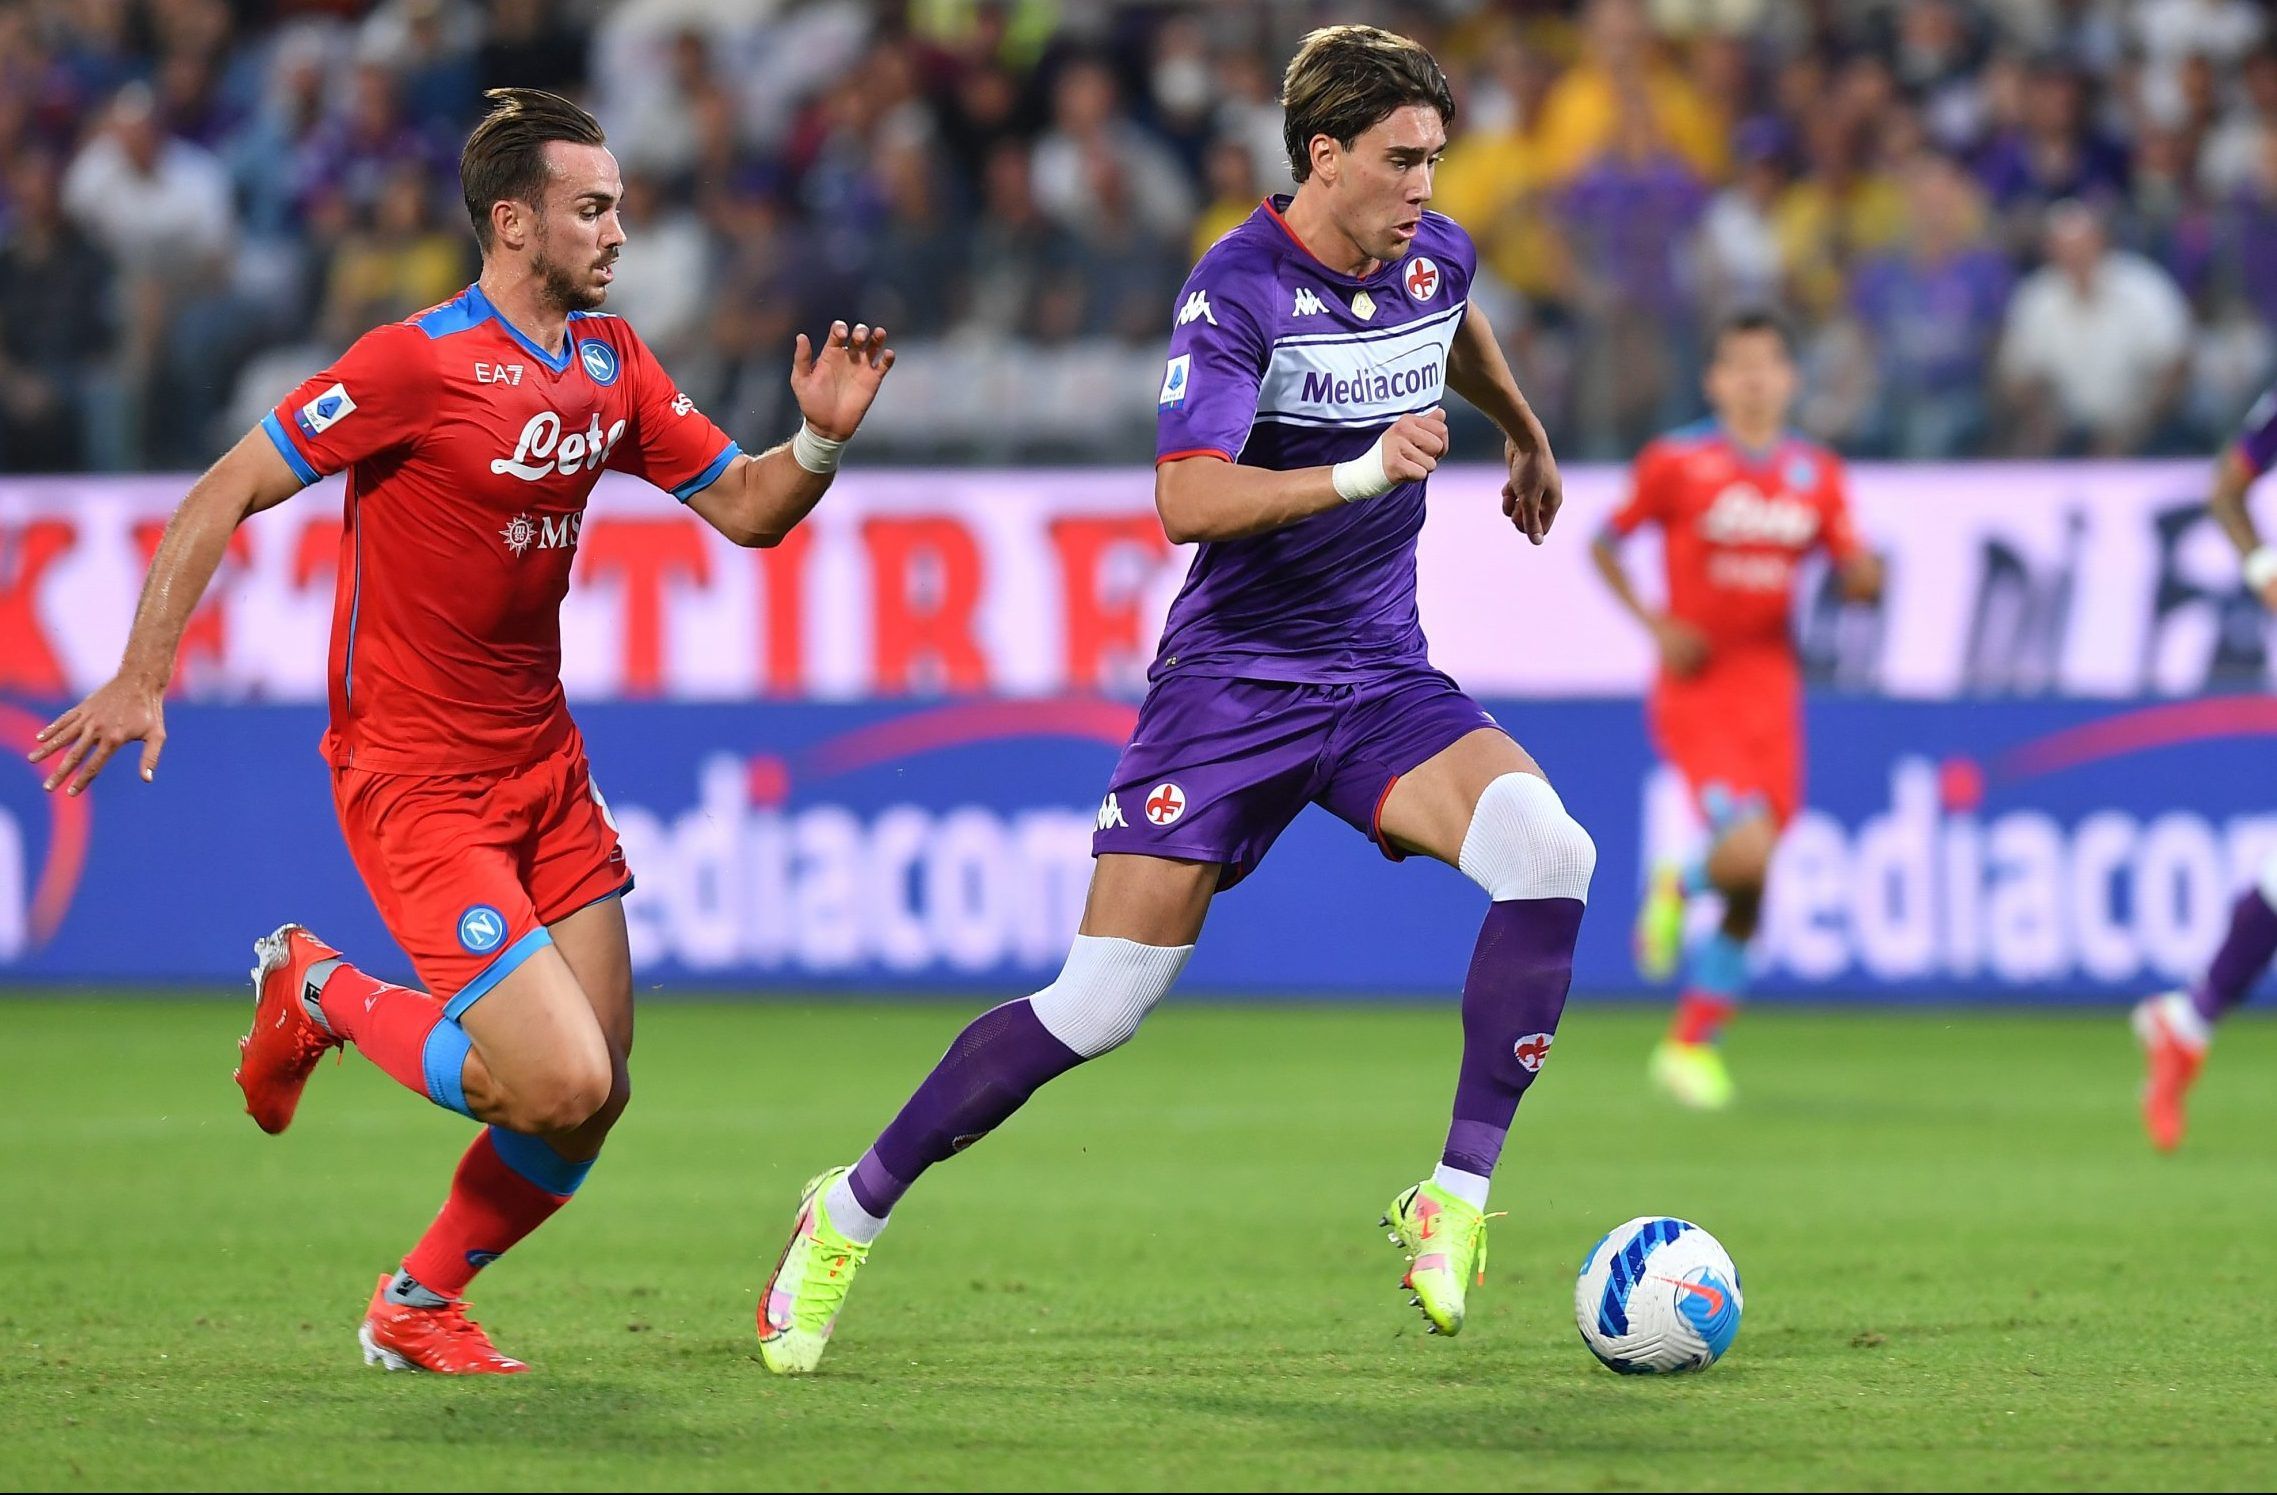 Fiorentina striker Dusan Vlahovic on the ball against Napoli's Fabian Ruiz in the Serie A